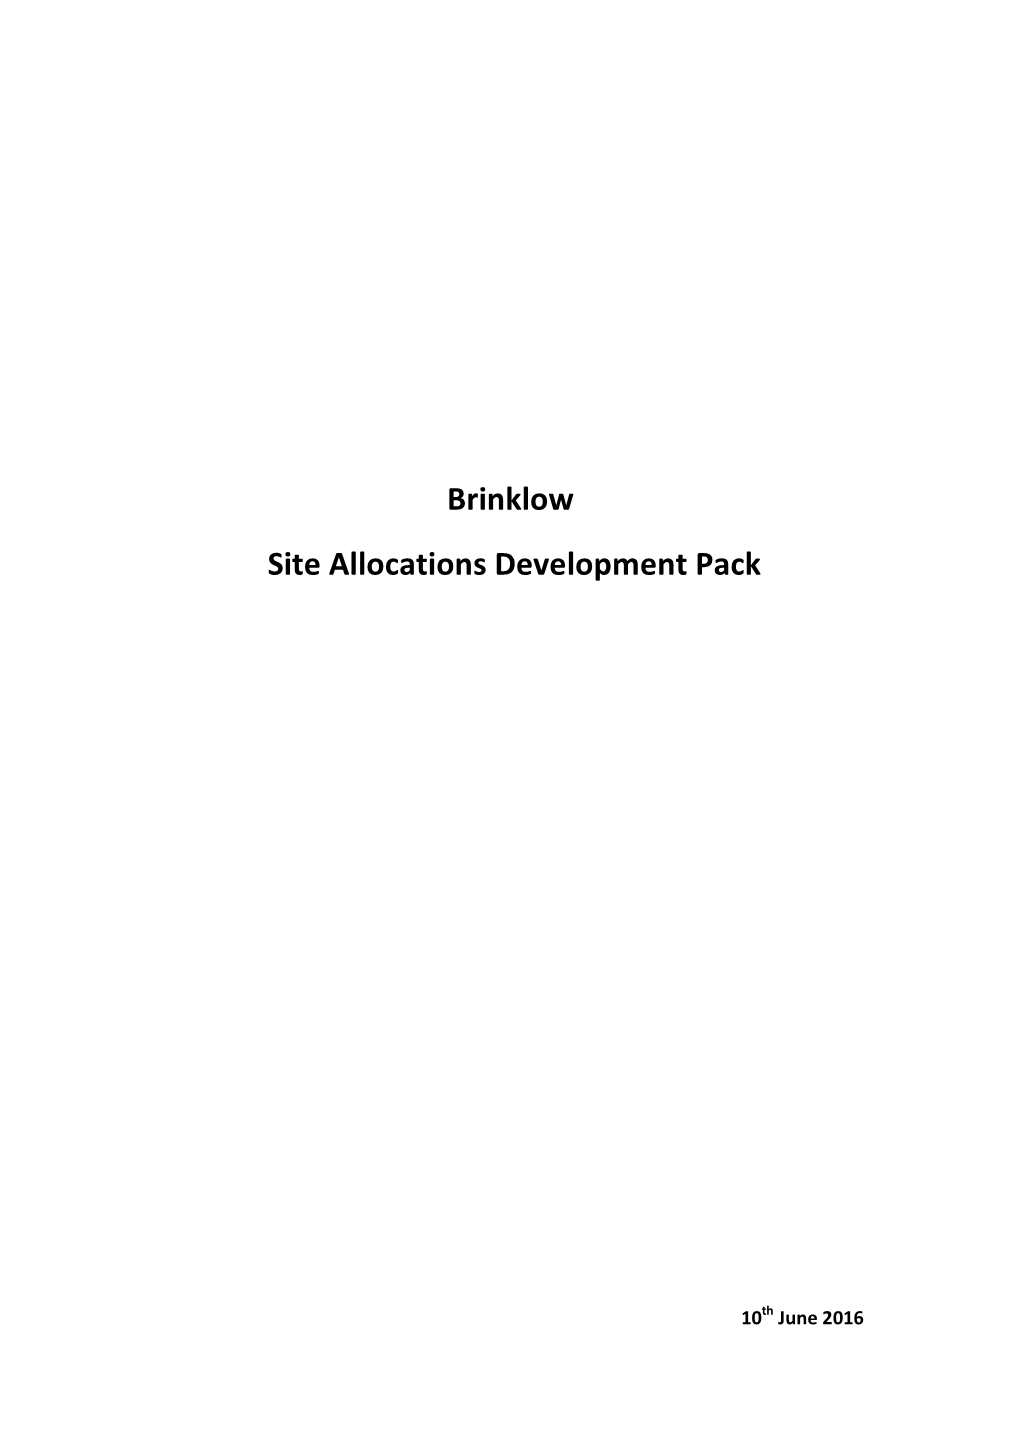 Brinklow Site Allocations Development Pack